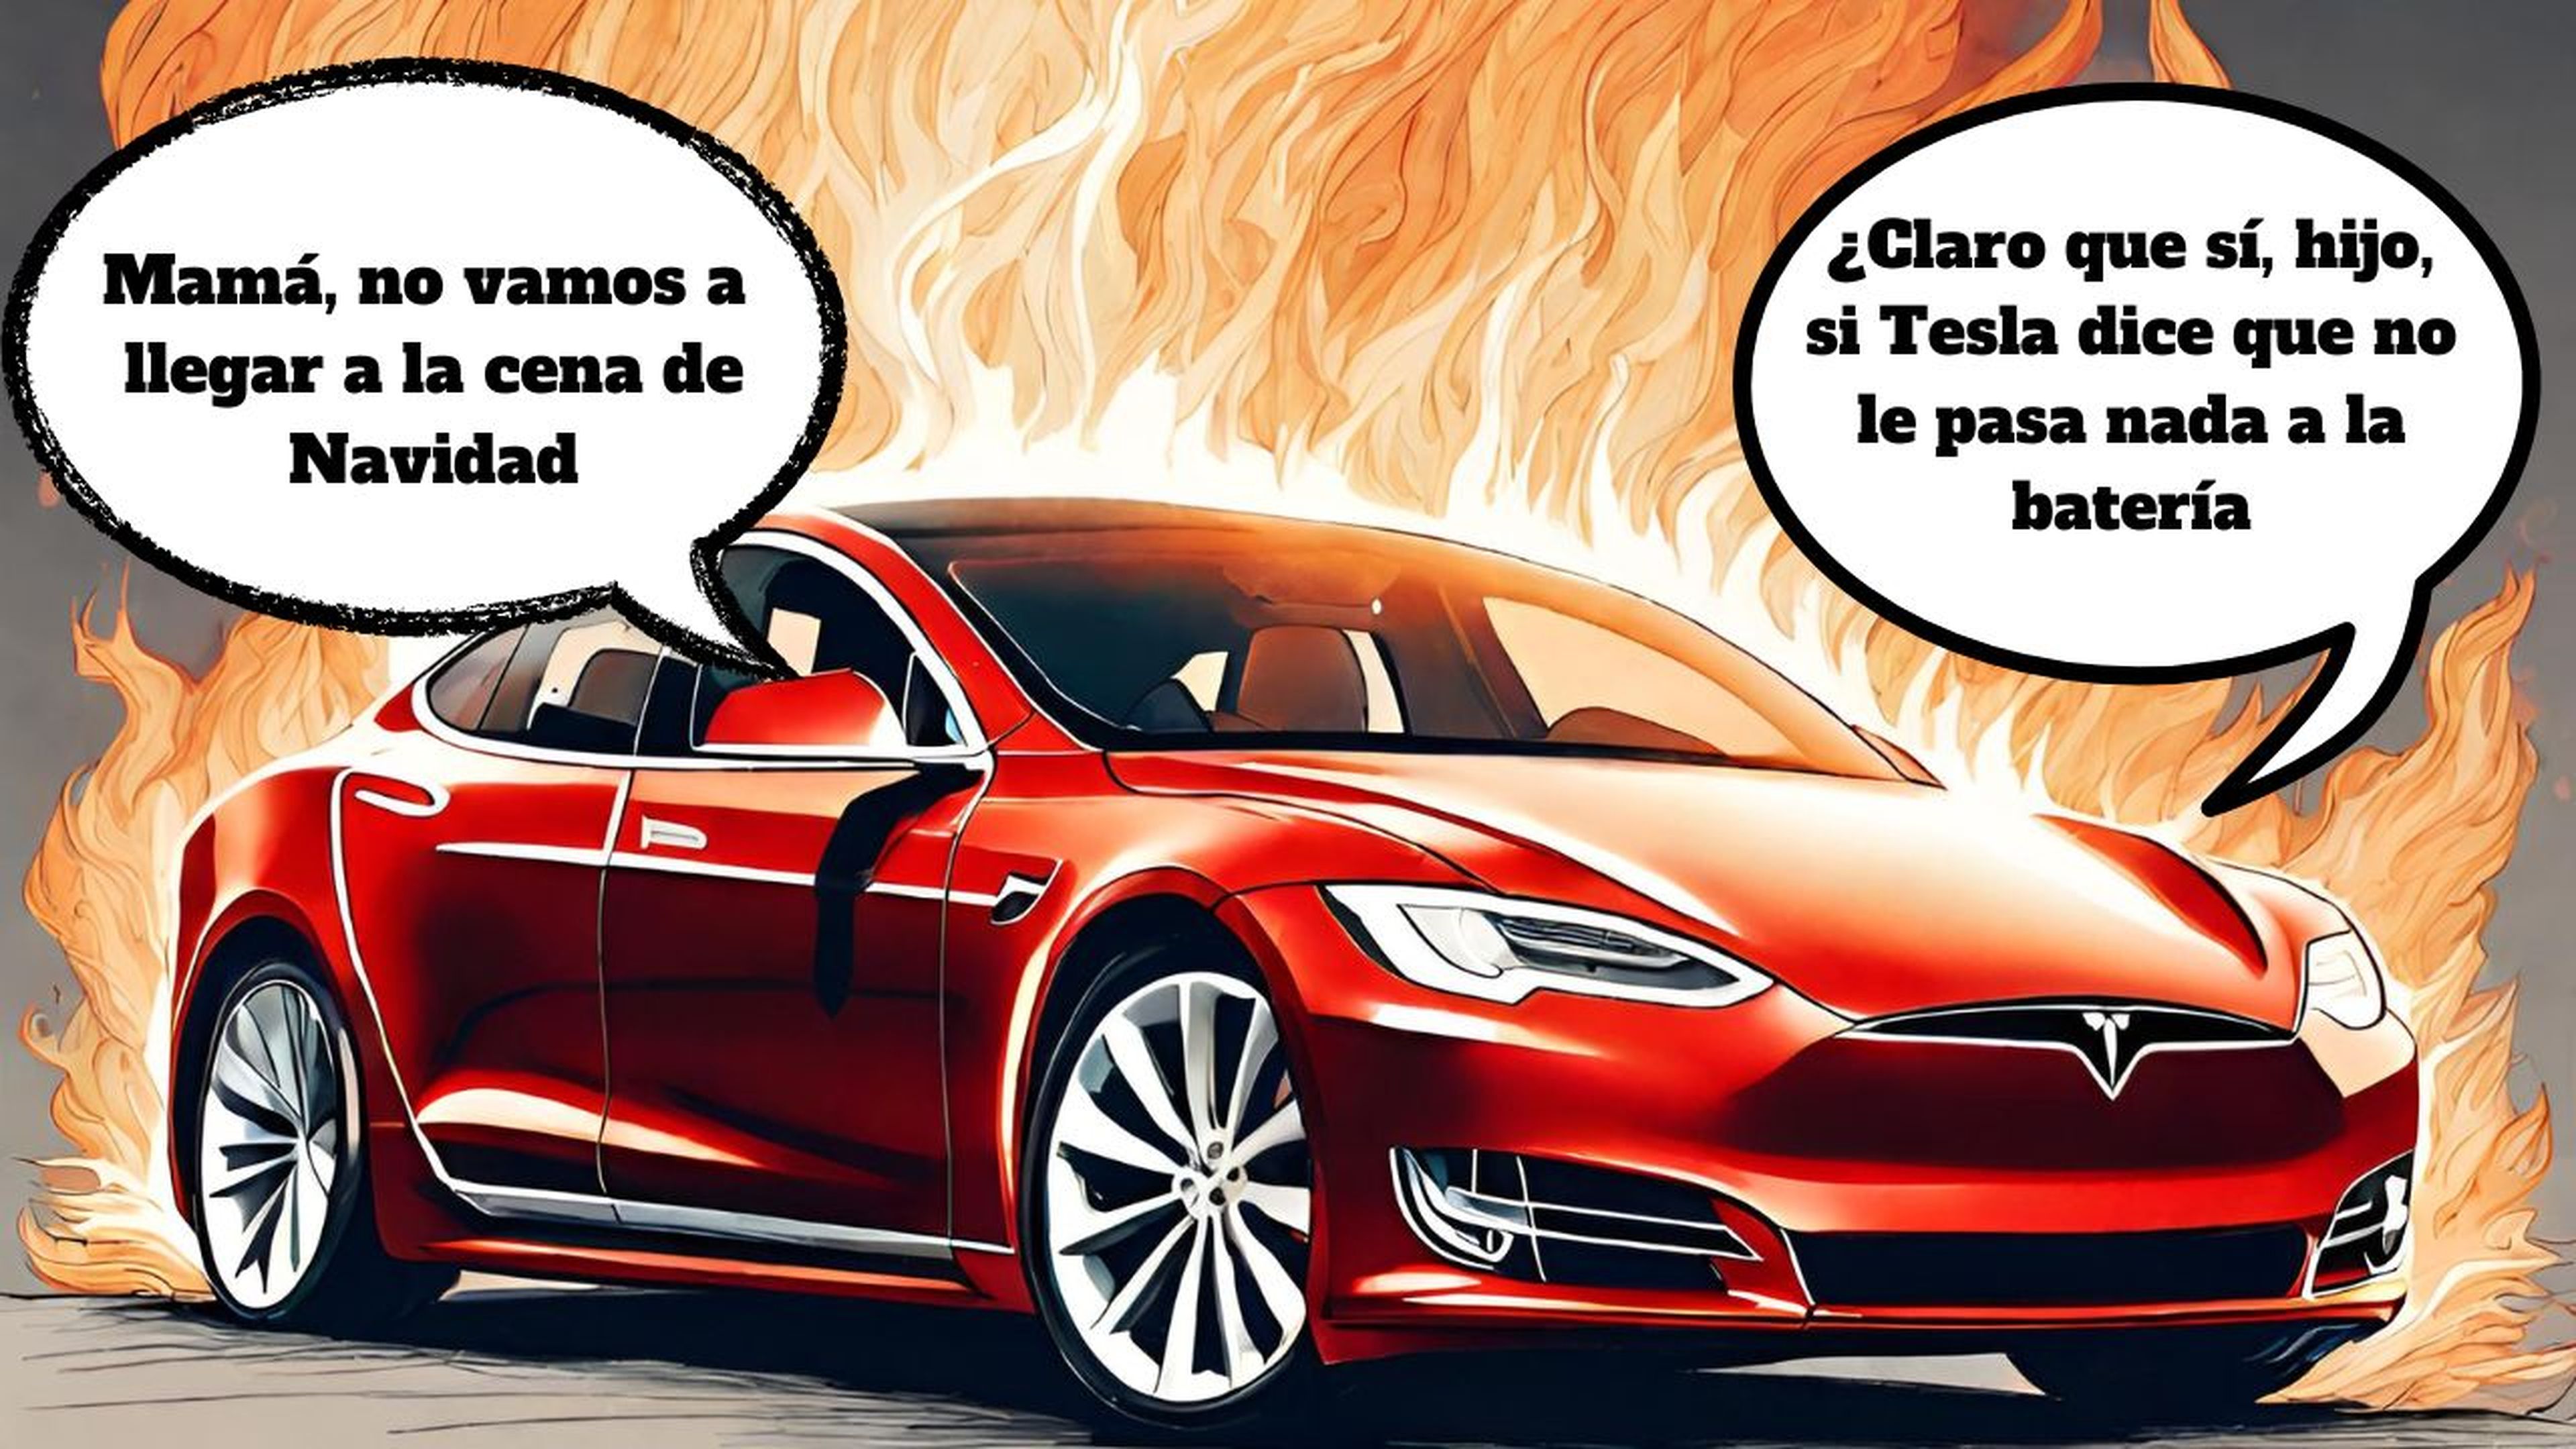 Meme Navidad Tesla ardiendo